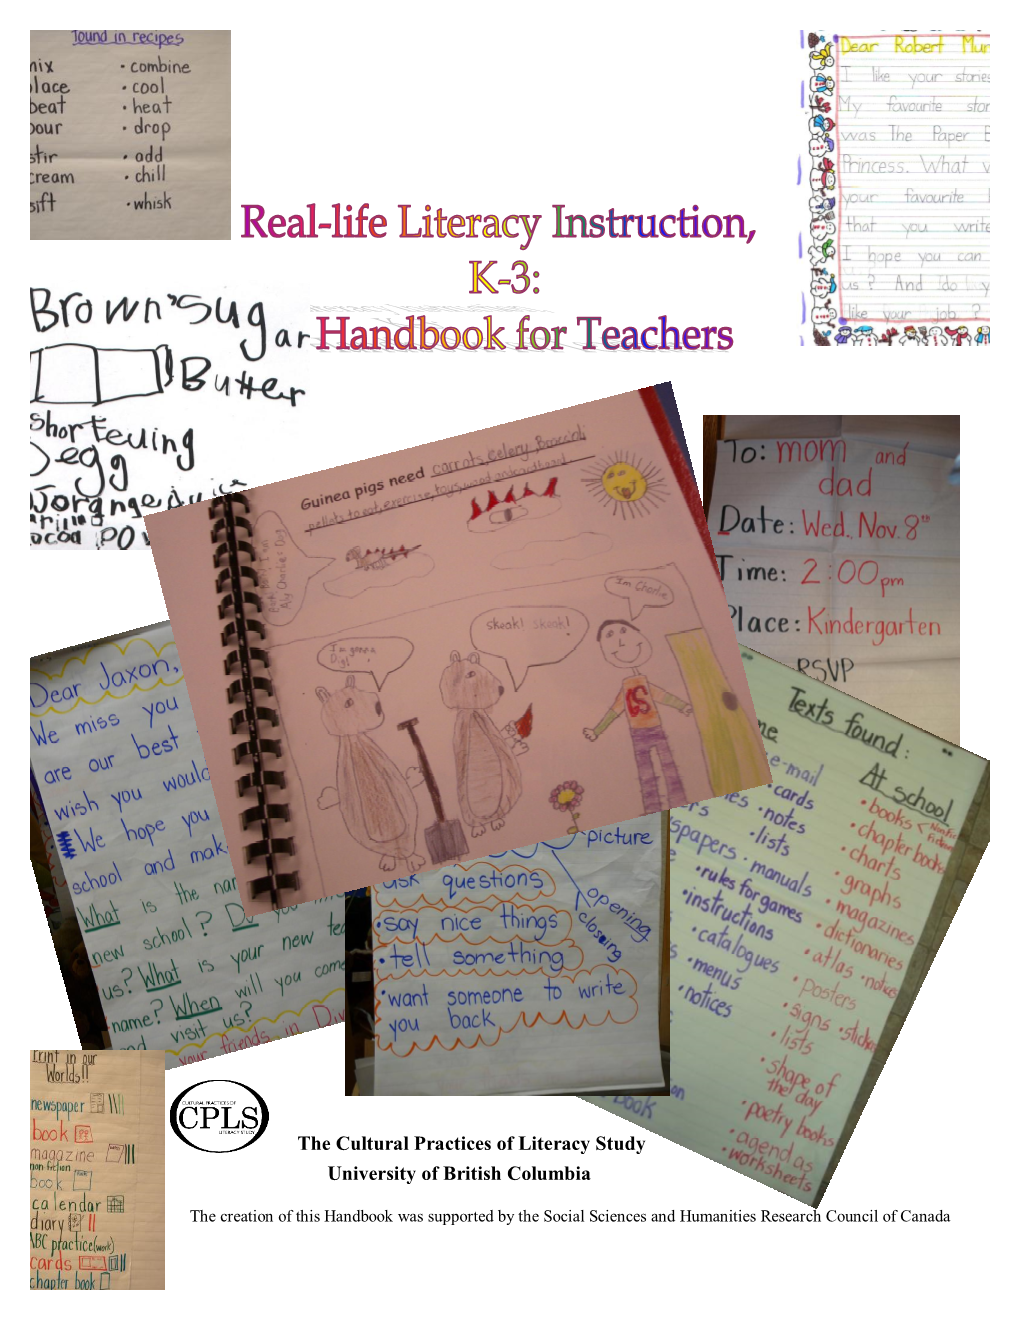 Real-Life Literacy Instruction, K-3: a Handbook for Teachers